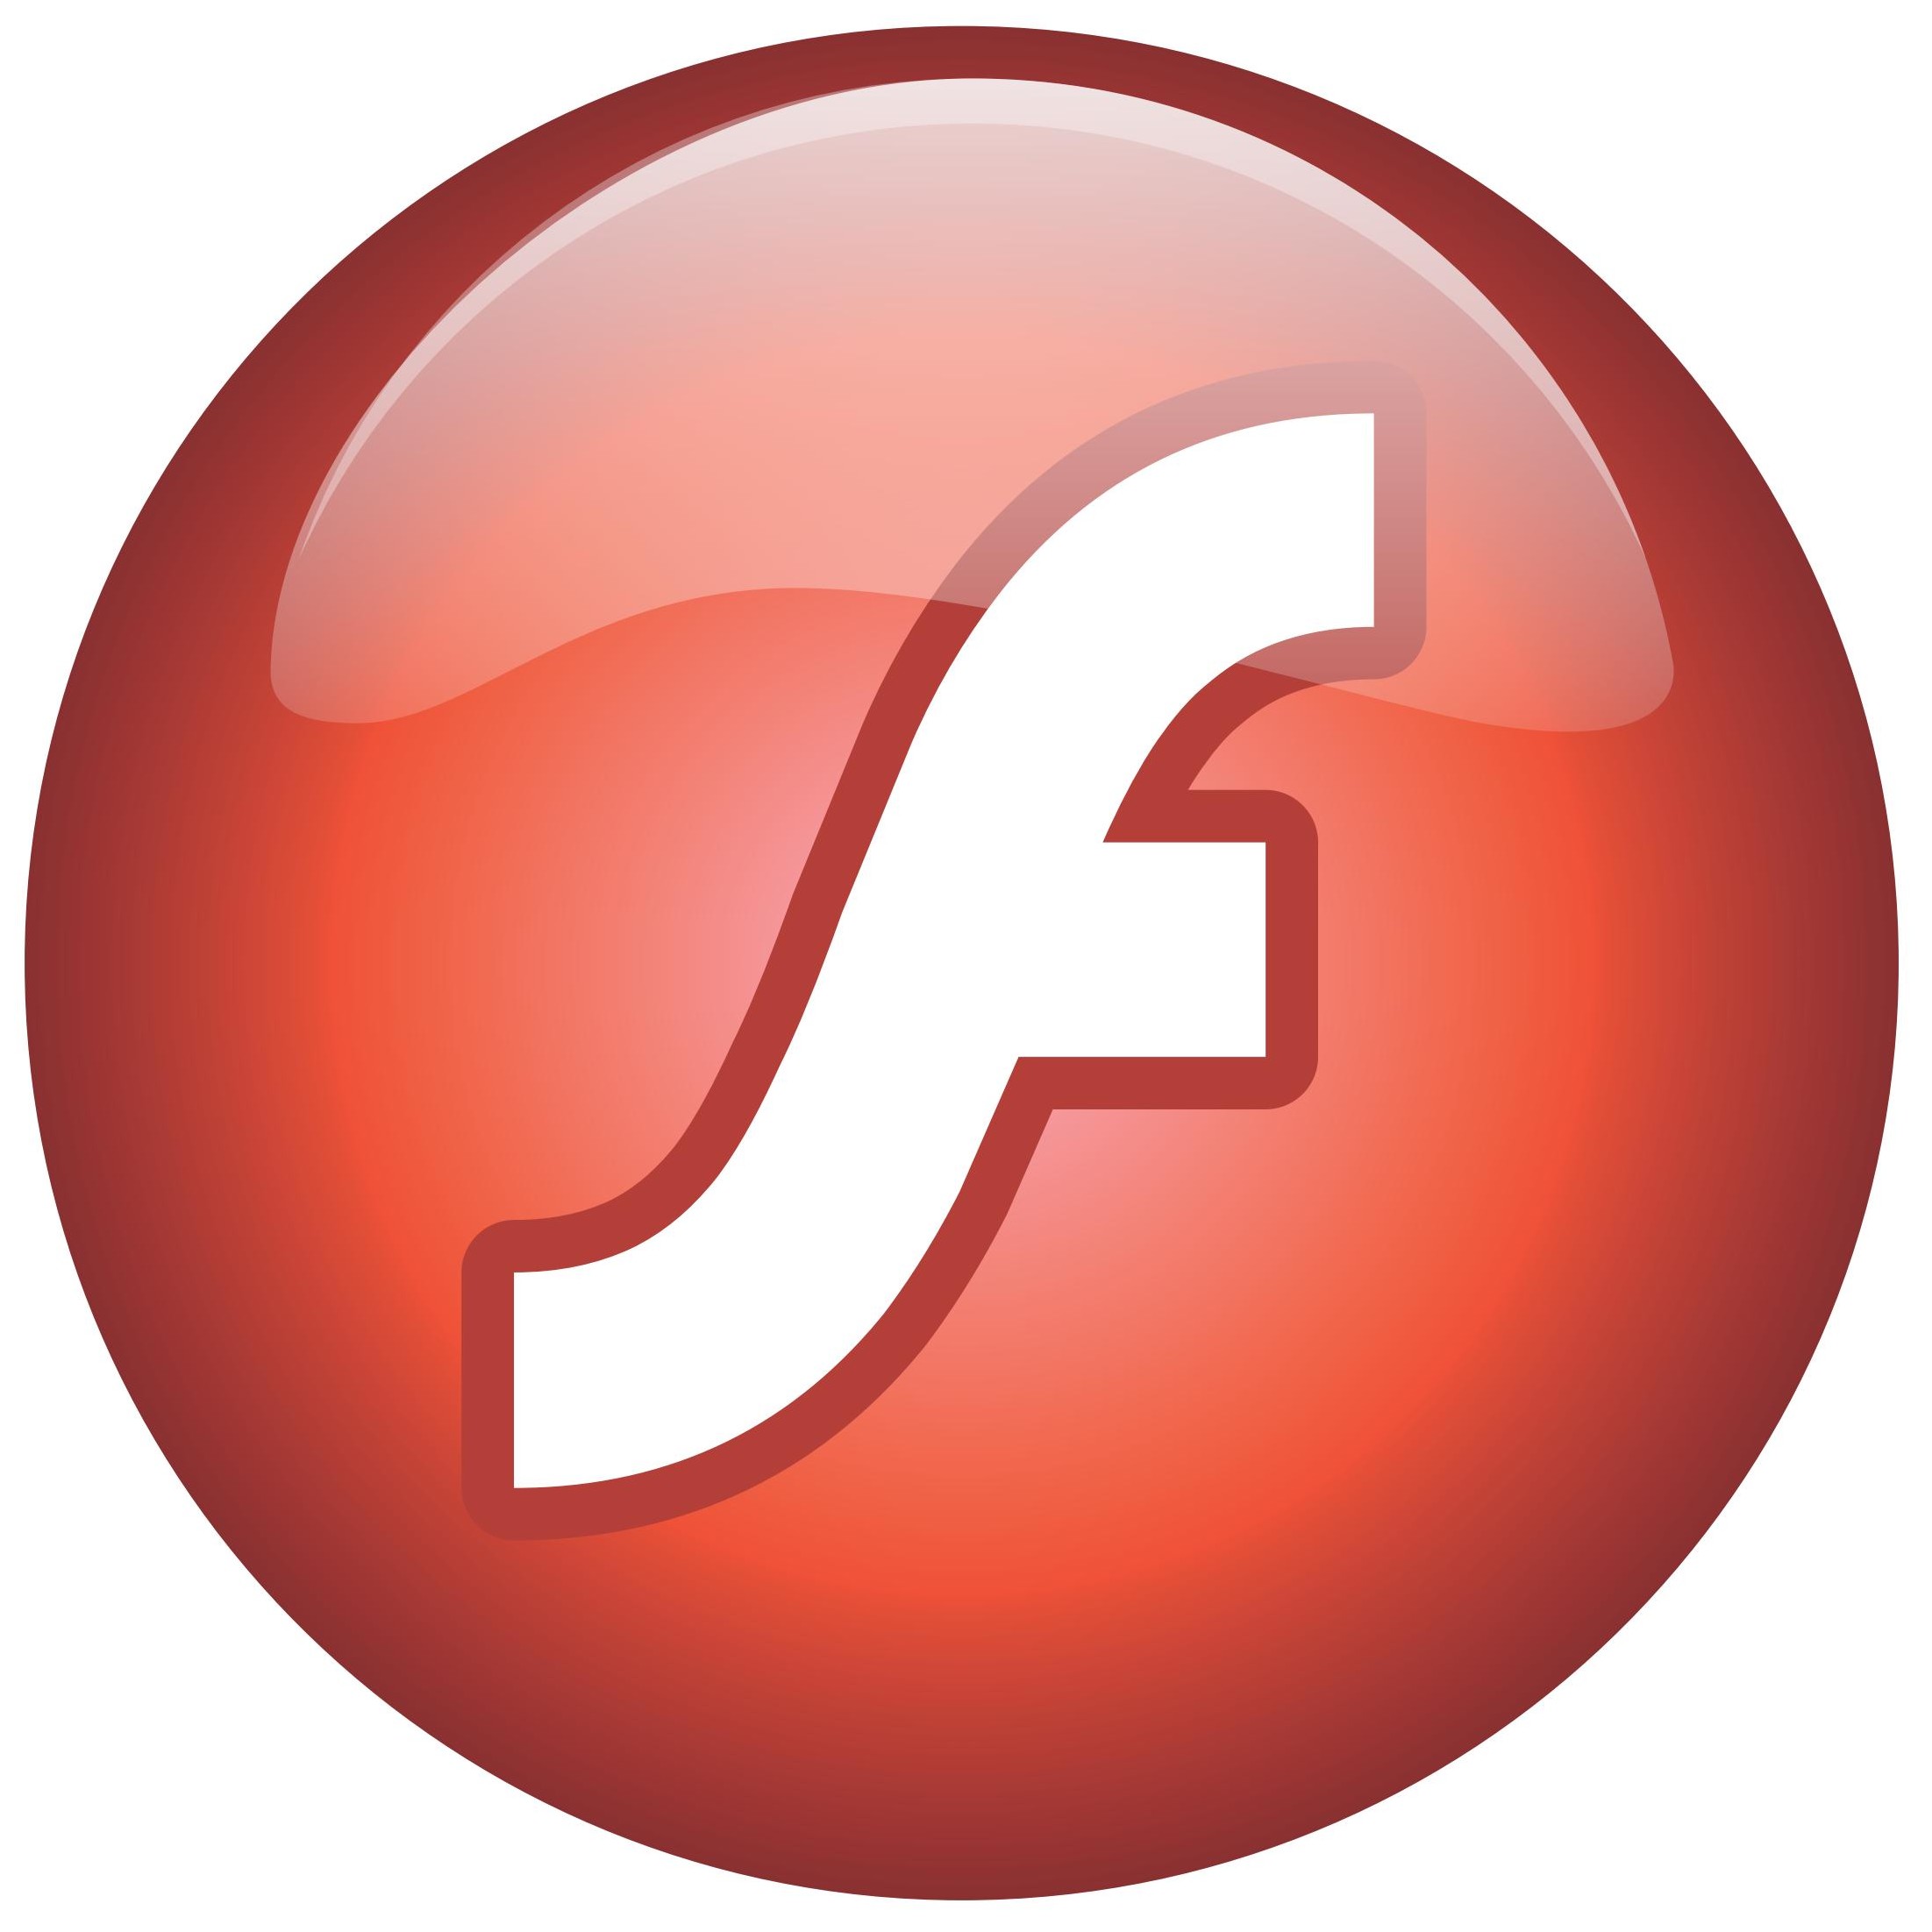 Adobe Flash 8 Logo Vector PNG - 28471